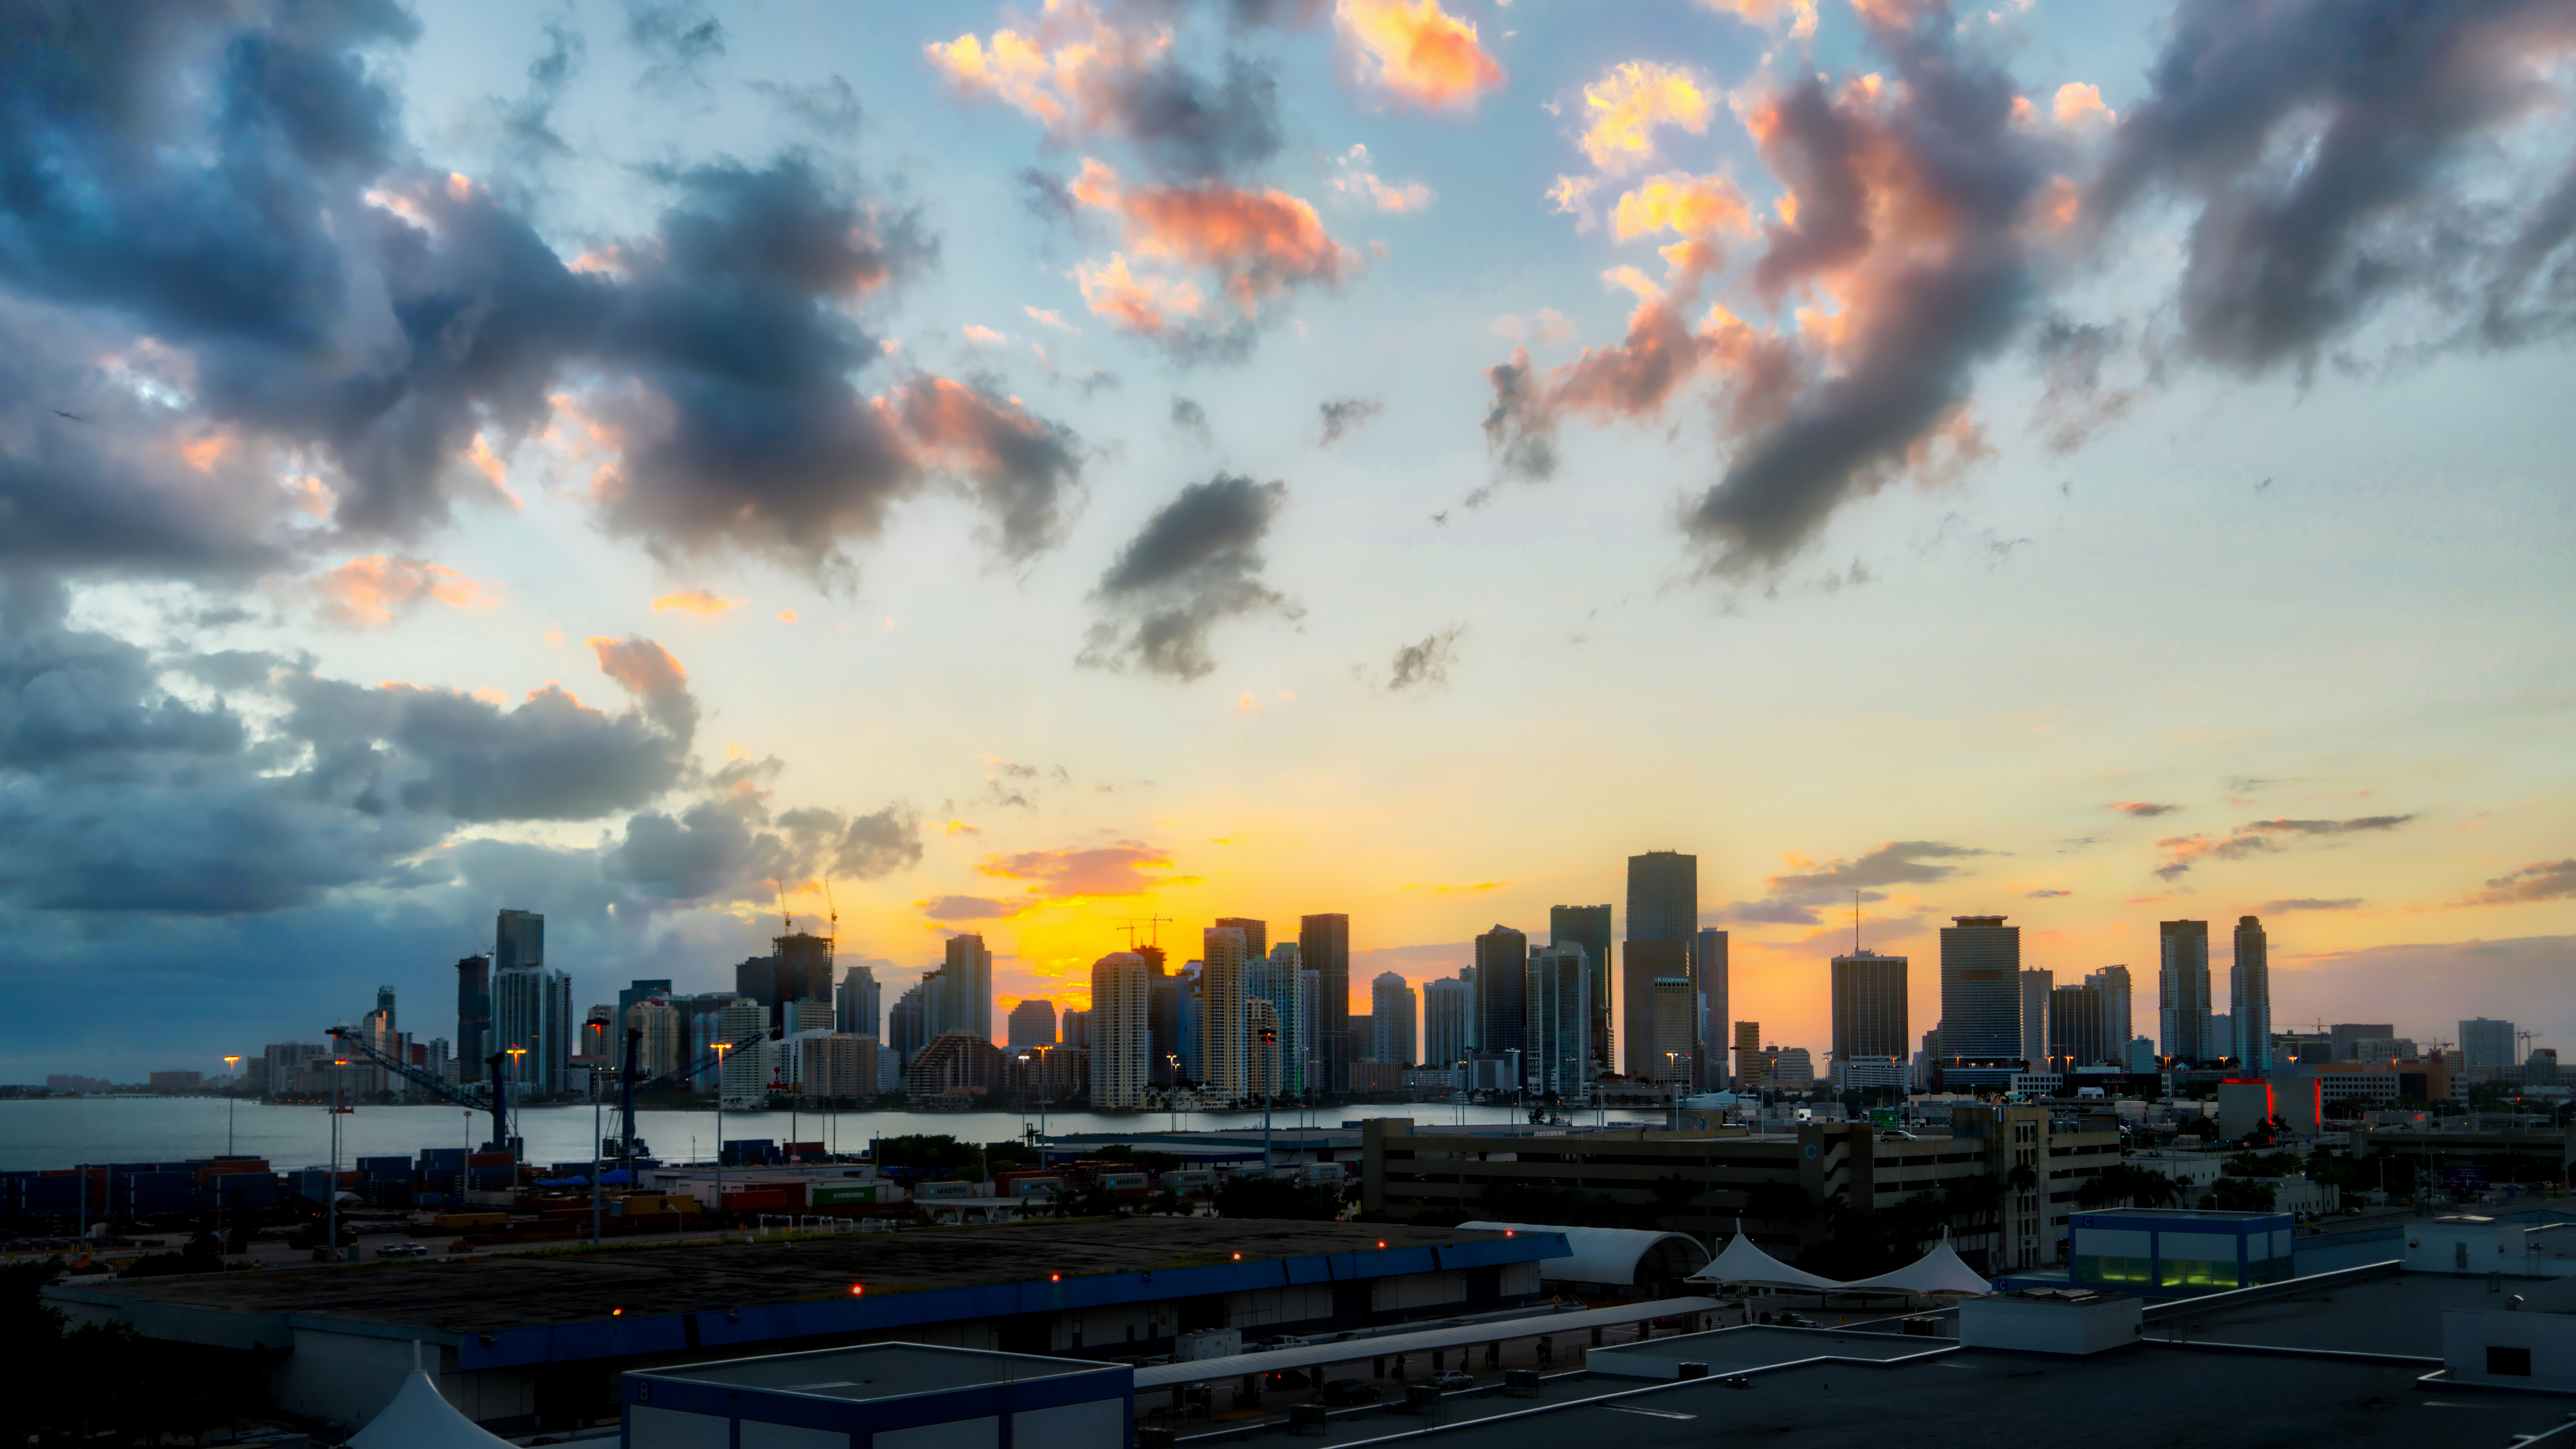 General 7680x4320 photography Trey Ratcliff USA Florida Miami cityscape building skyscraper clouds sky